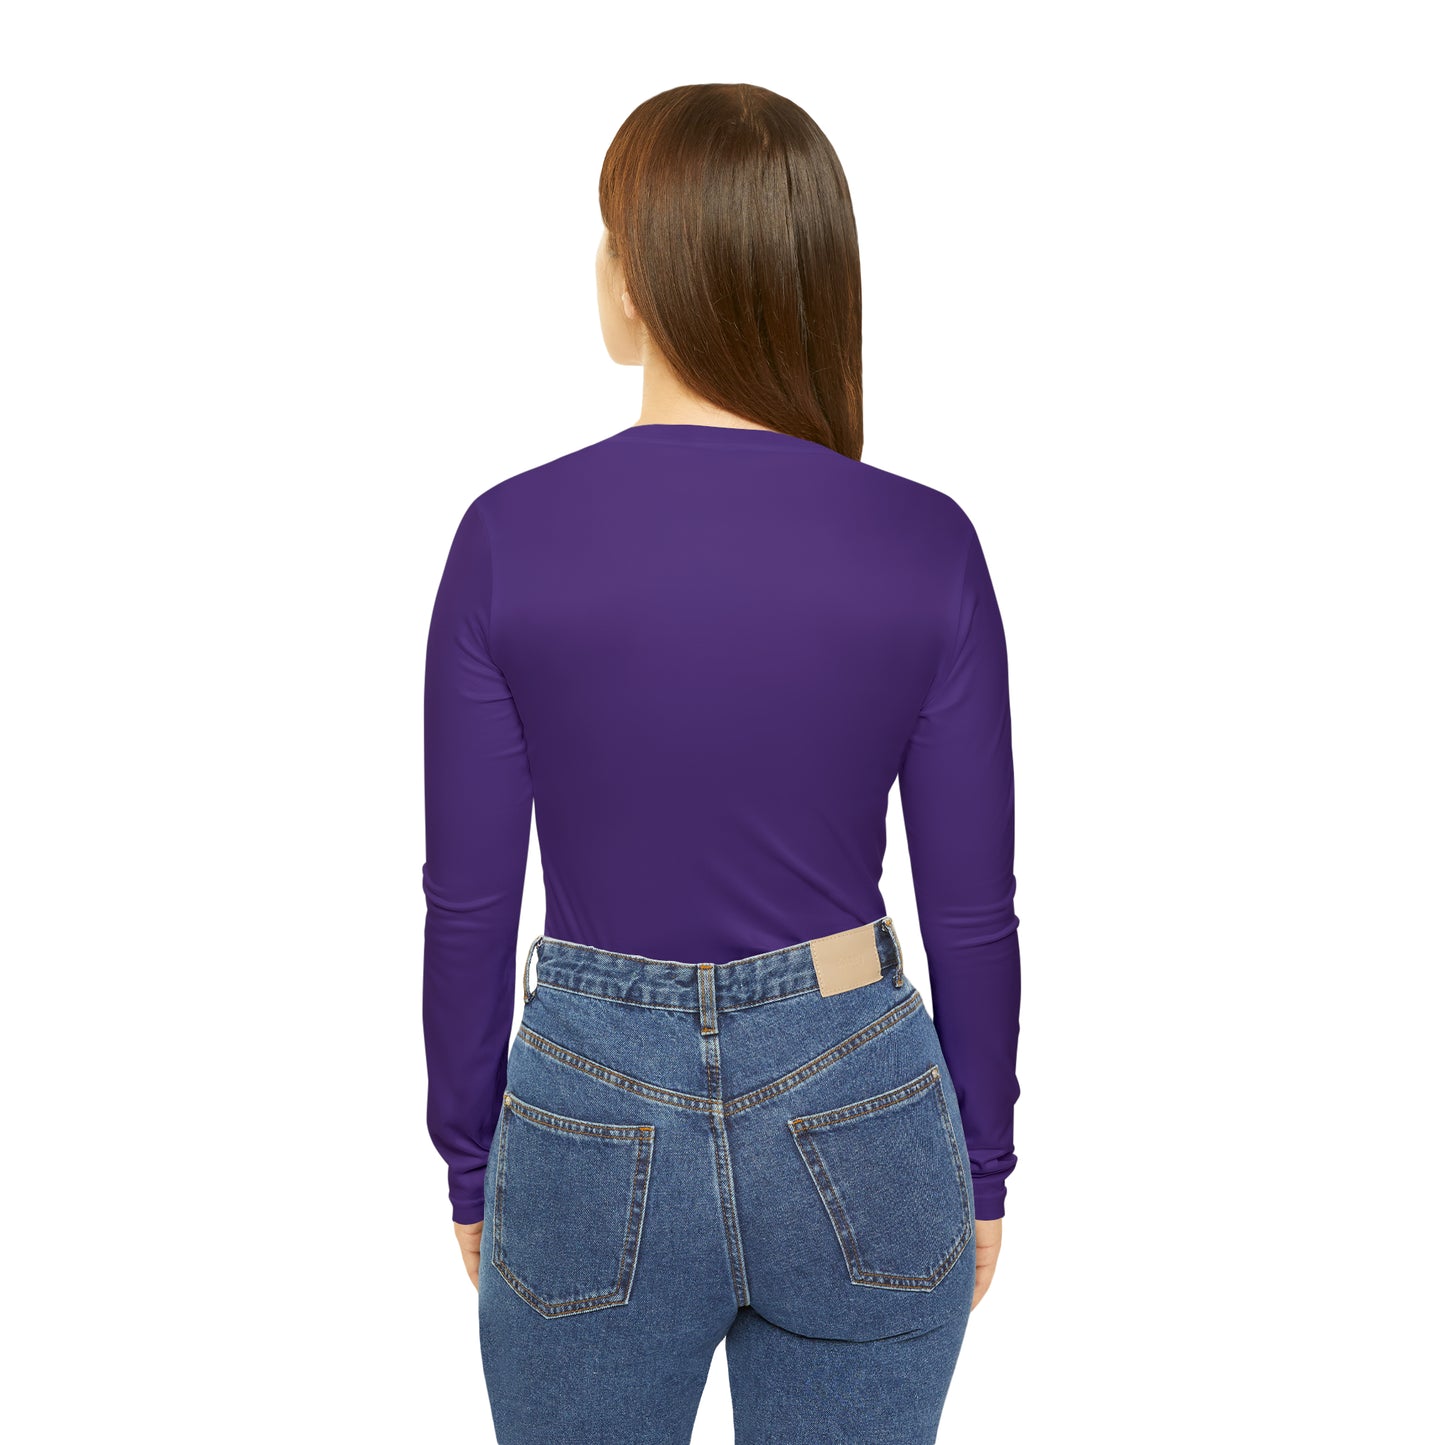 Premium Crap II Women's Long Sleeve V-neck Shirt - Purple